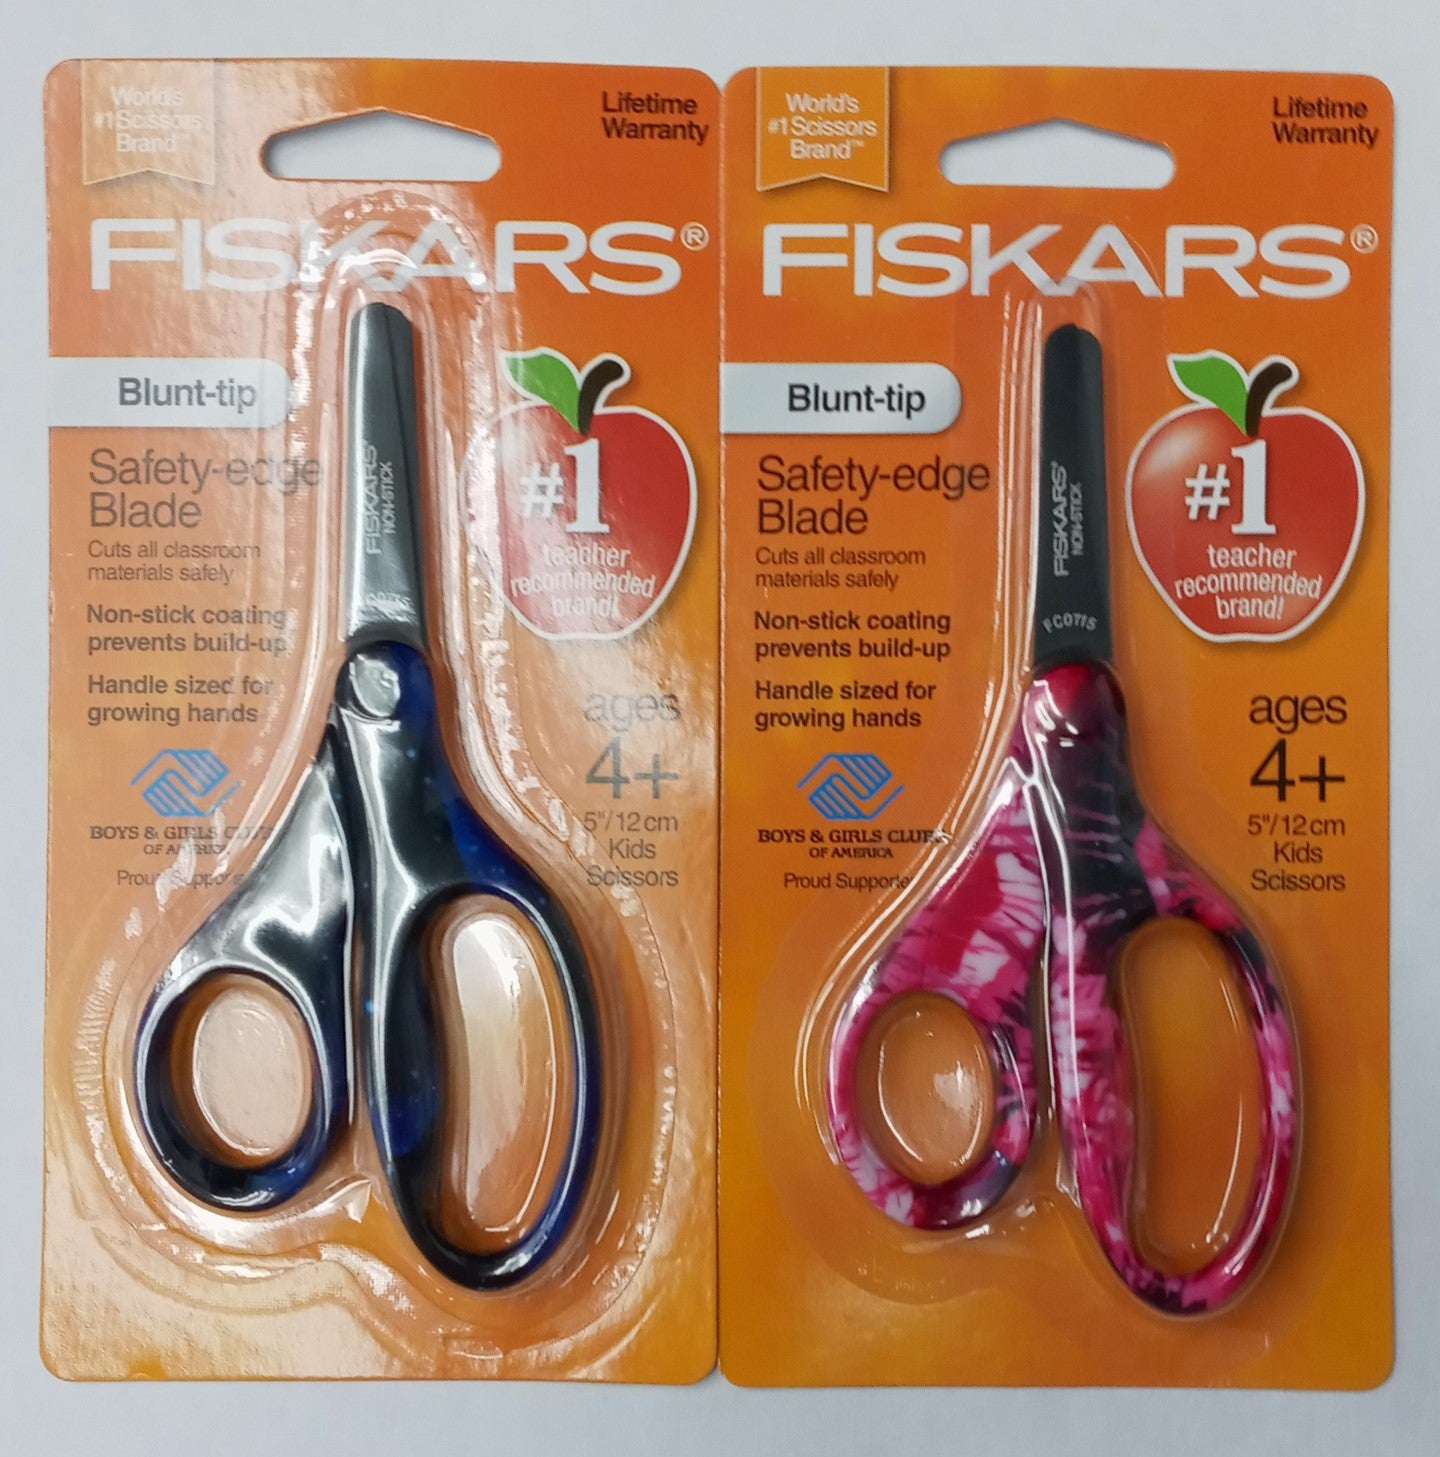 Fiskars 124162 5" Blunt-tip Safety-edge Kid Scissors 2pc (assorted colors)